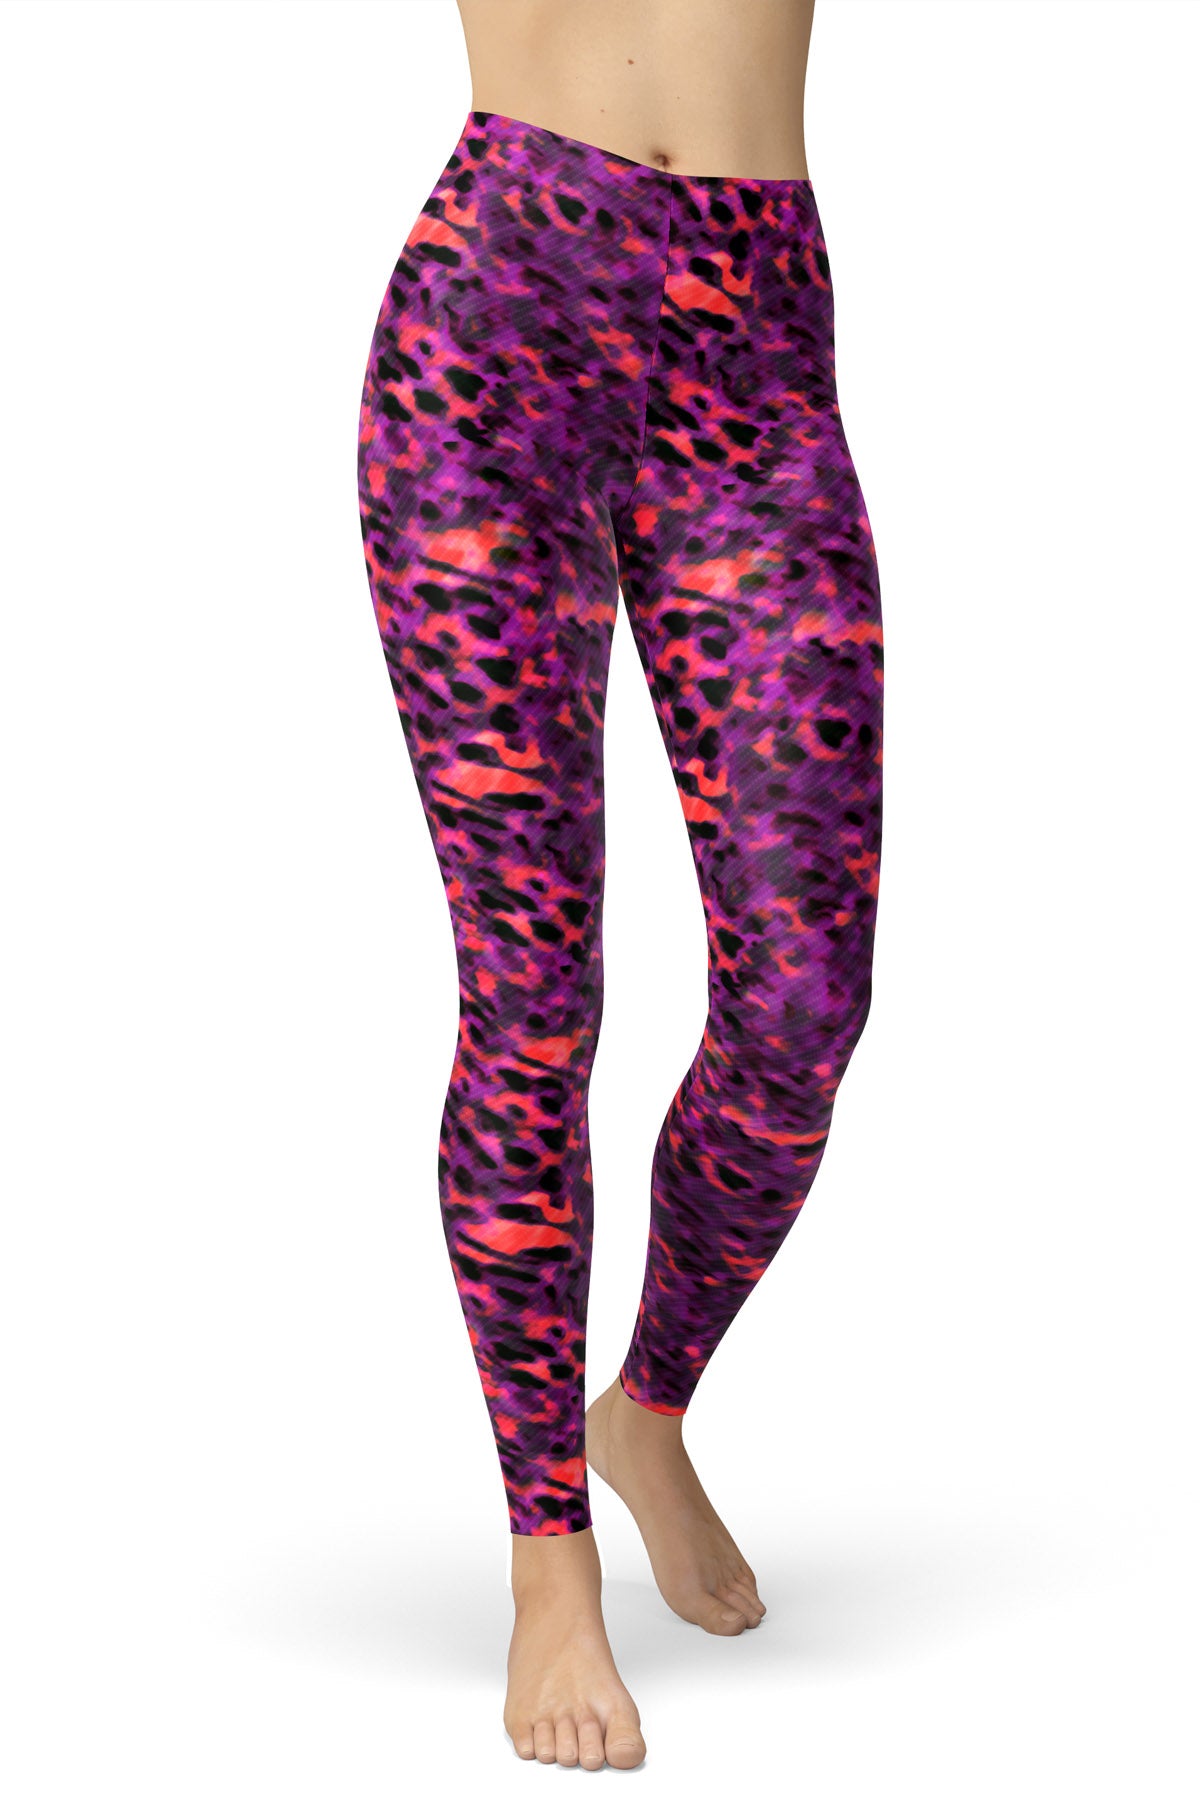 Neon Leopard Yoga Pants